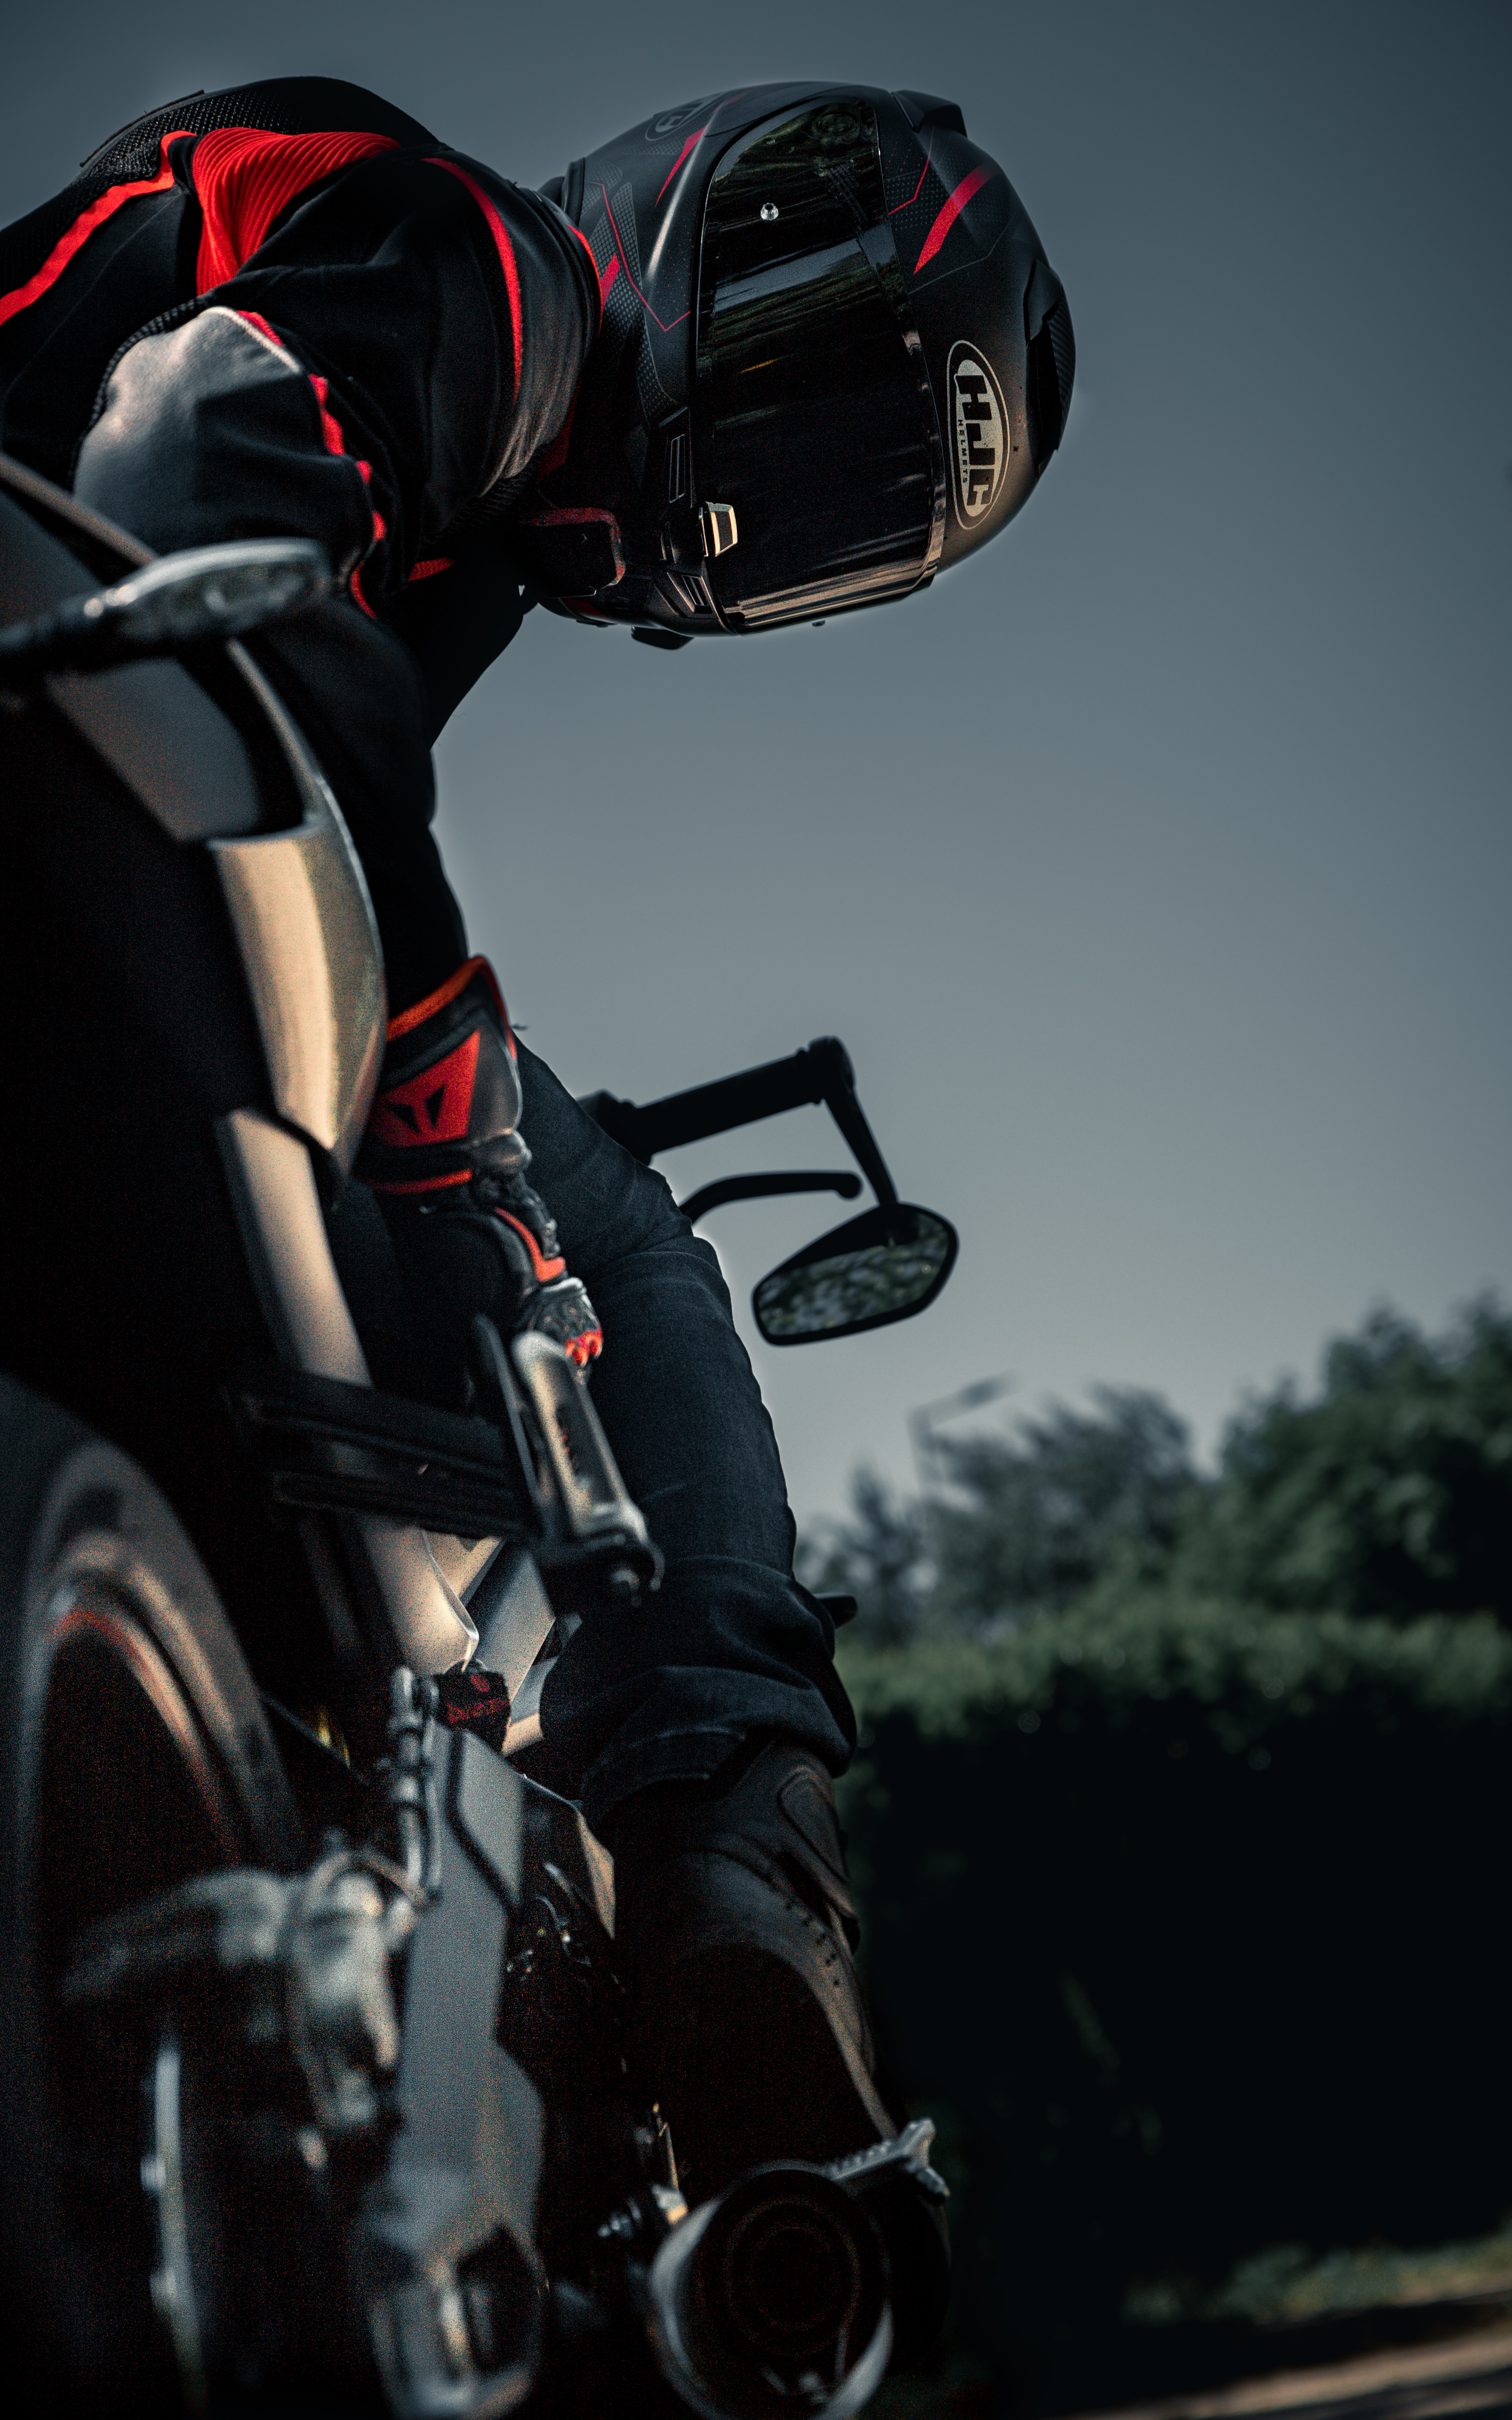 Desktop Backgrounds Motorcycles outfit, motorcyclist, motorcycle, helmet